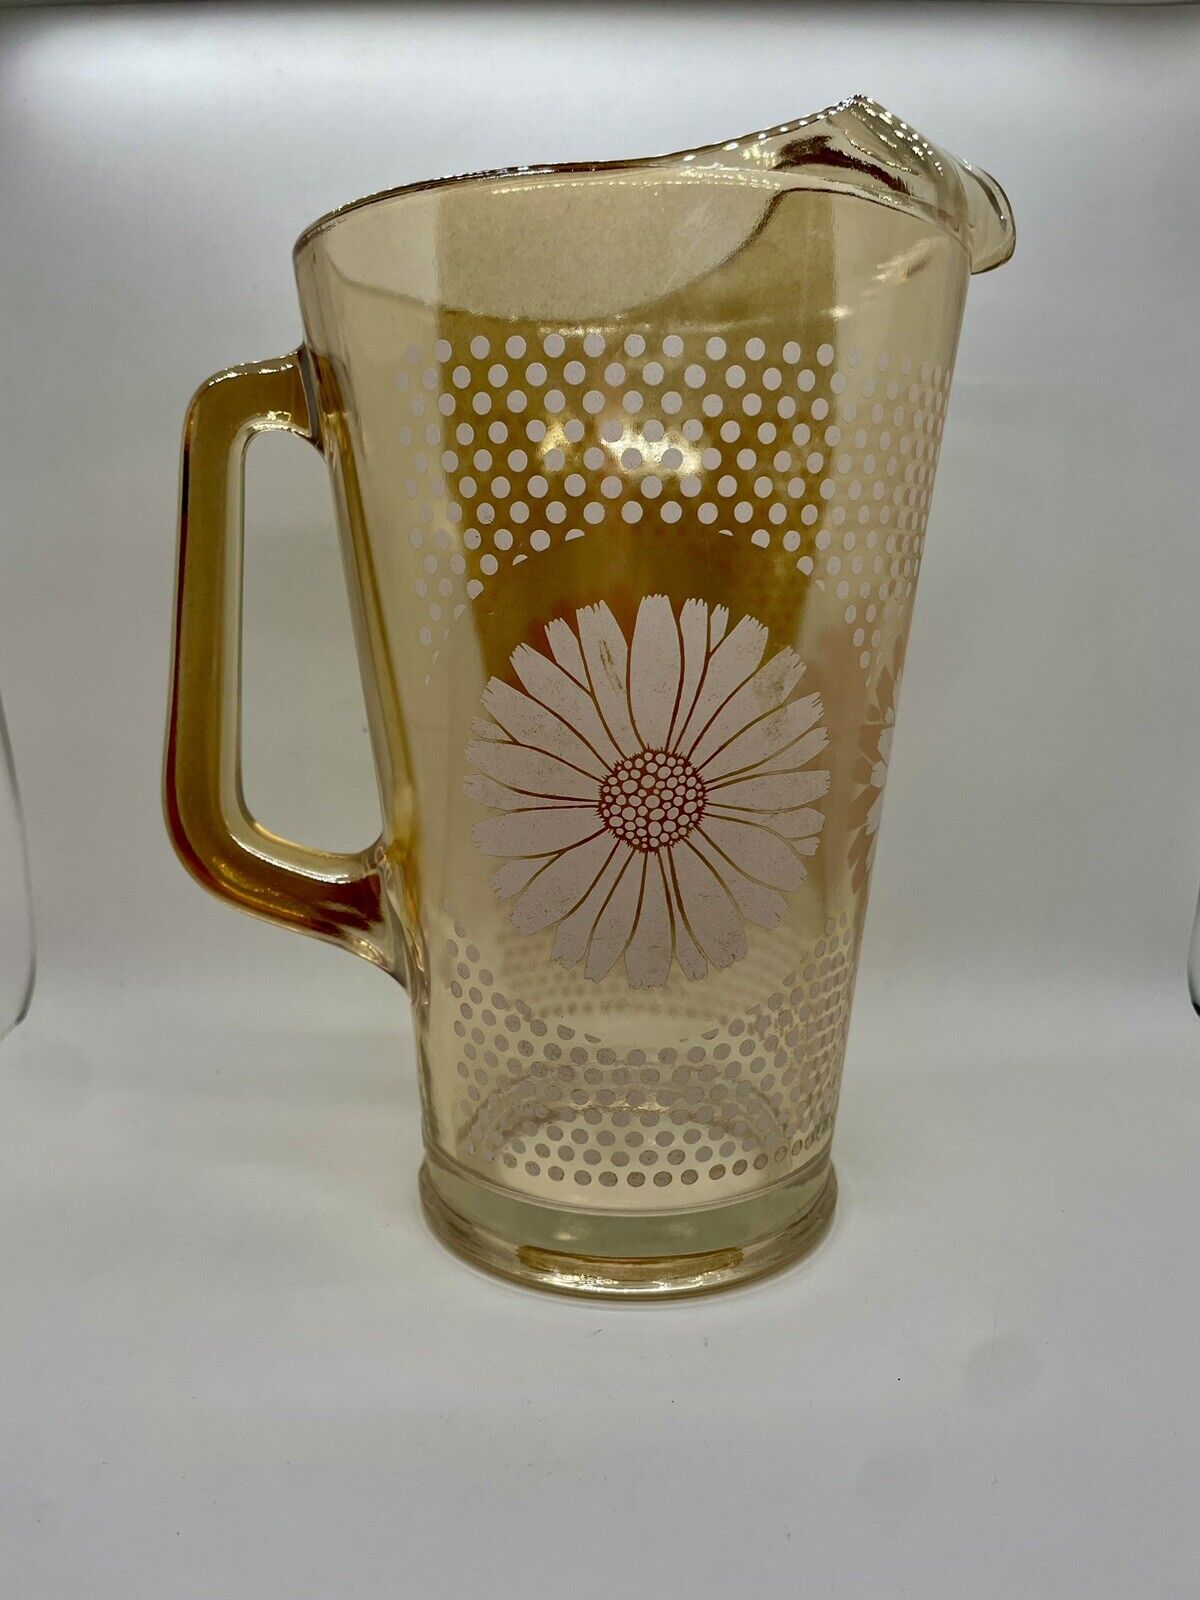 Vintage Glass Pitcher Flower Daisy & Dots Iridescent Amber Glass White Flower